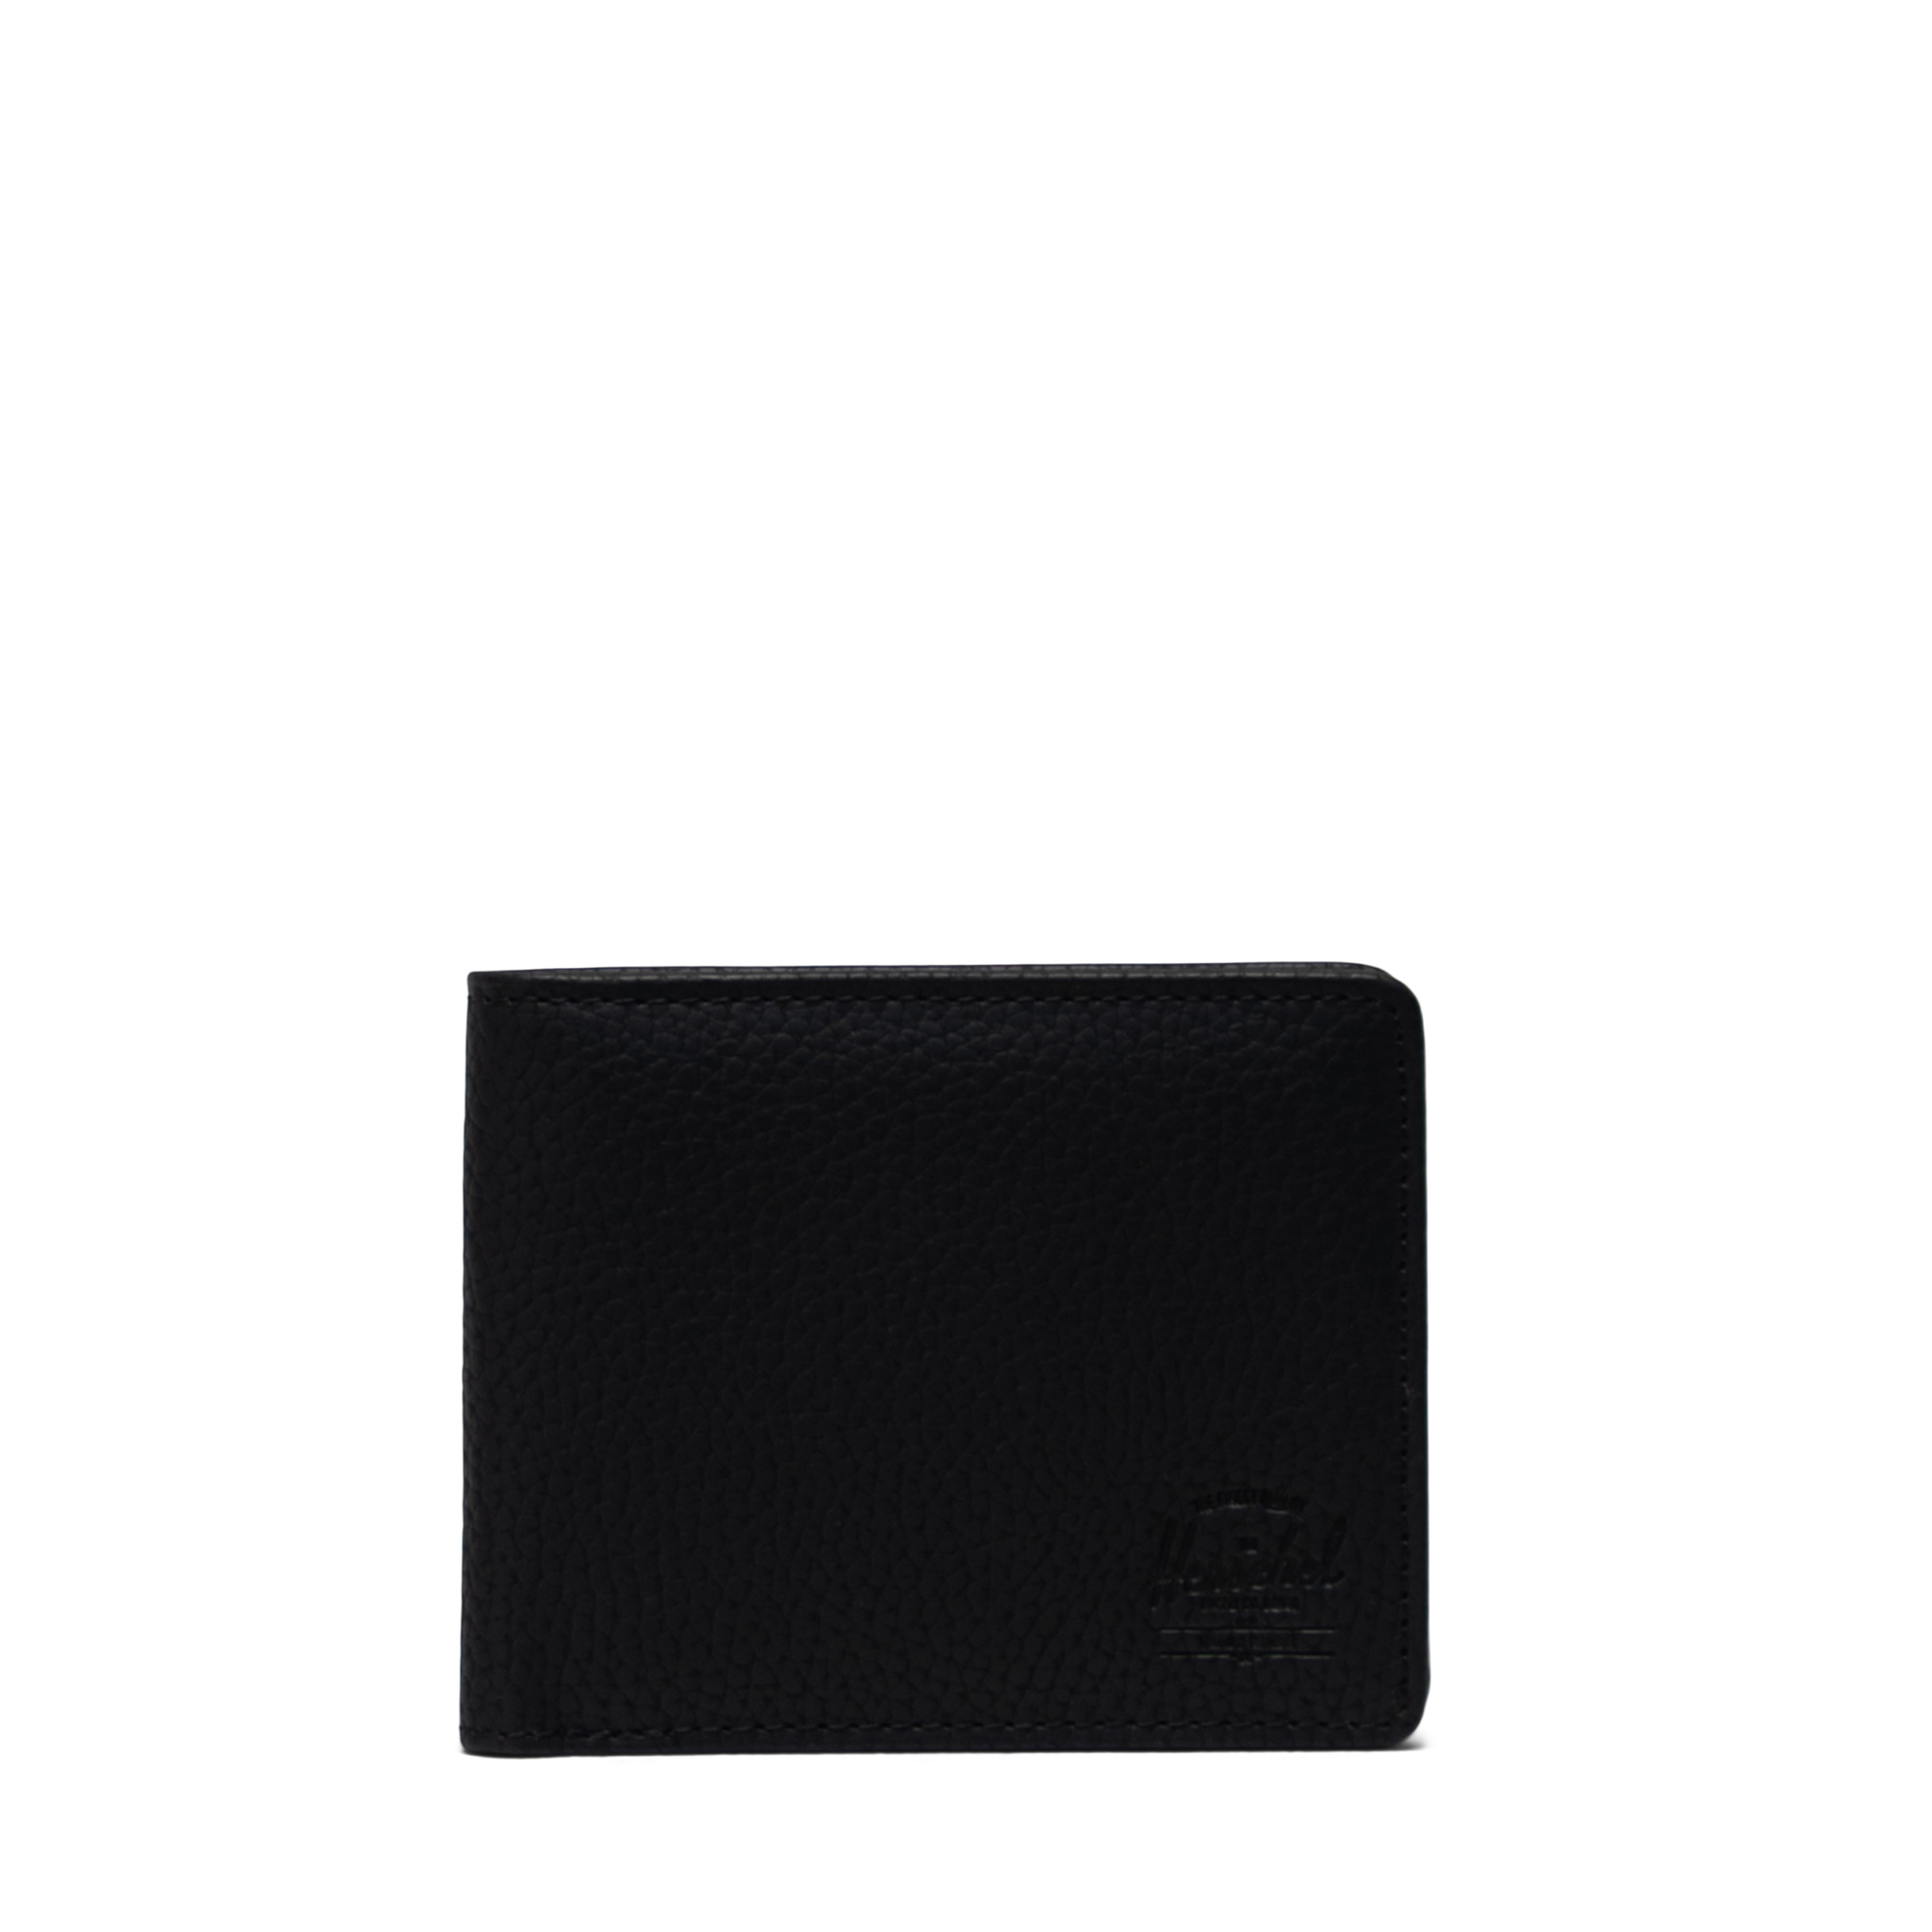 Tan vegan leather wallet with wrist strap | Leather wallet, Wrist strap,  Leather